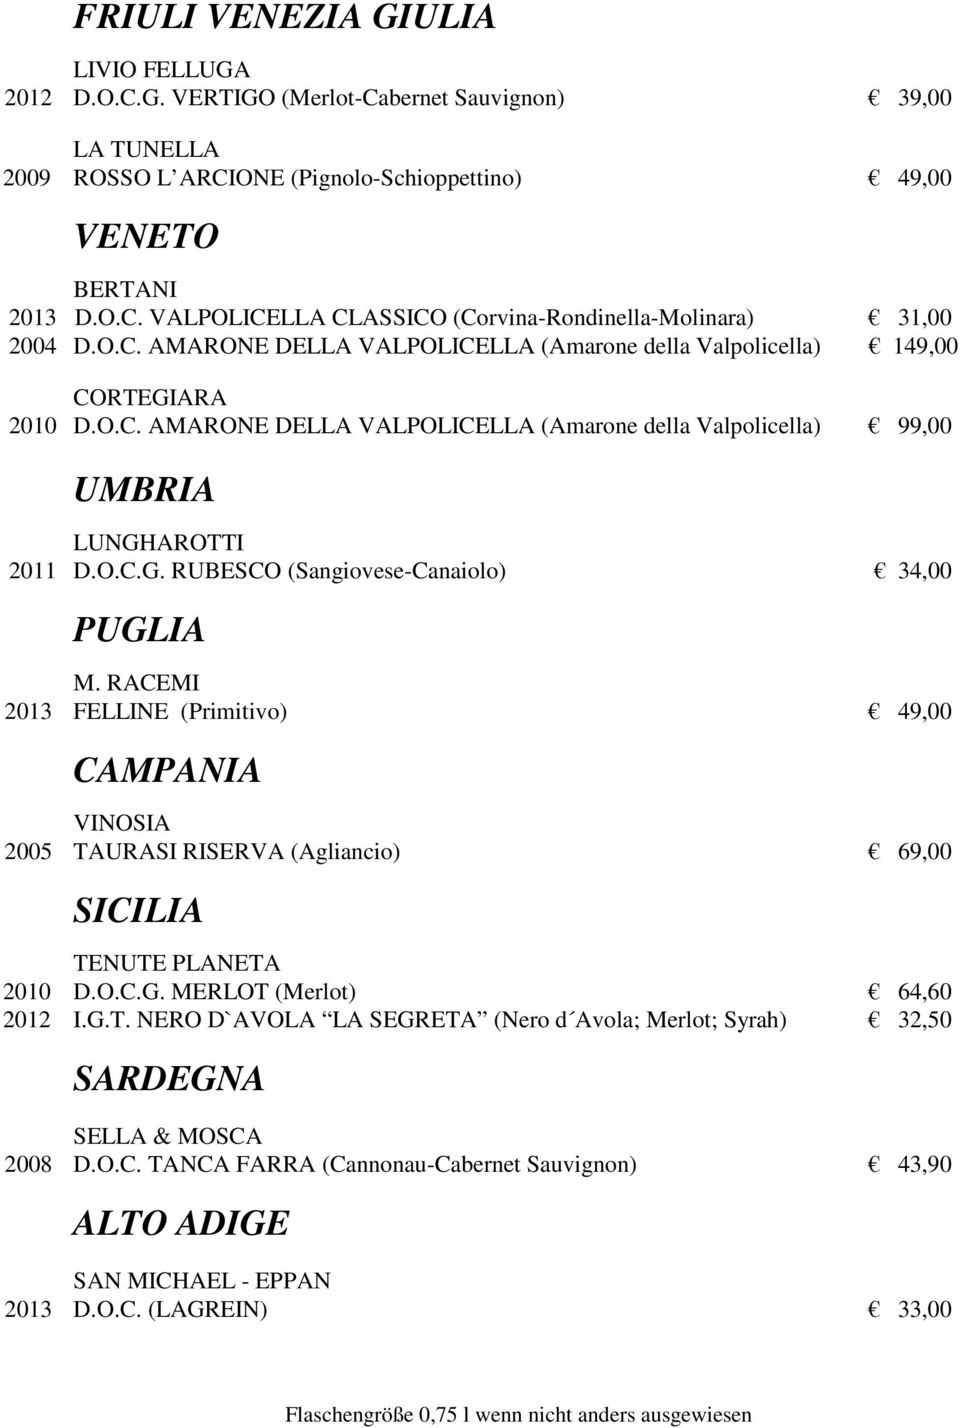 RACEMI 2013 FELLINE (Primitivo) 49,00 CAMPANIA VINOSIA 2005 TAURASI RISERVA (Agliancio) 69,00 SICILIA TENUTE PLANETA 2010 D.O.C.G. MERLOT (Merlot) 64,60 2012 I.G.T. NERO D`AVOLA LA SEGRETA (Nero d Avola; Merlot; Syrah) 32,50 SARDEGNA SELLA & MOSCA 2008 D.